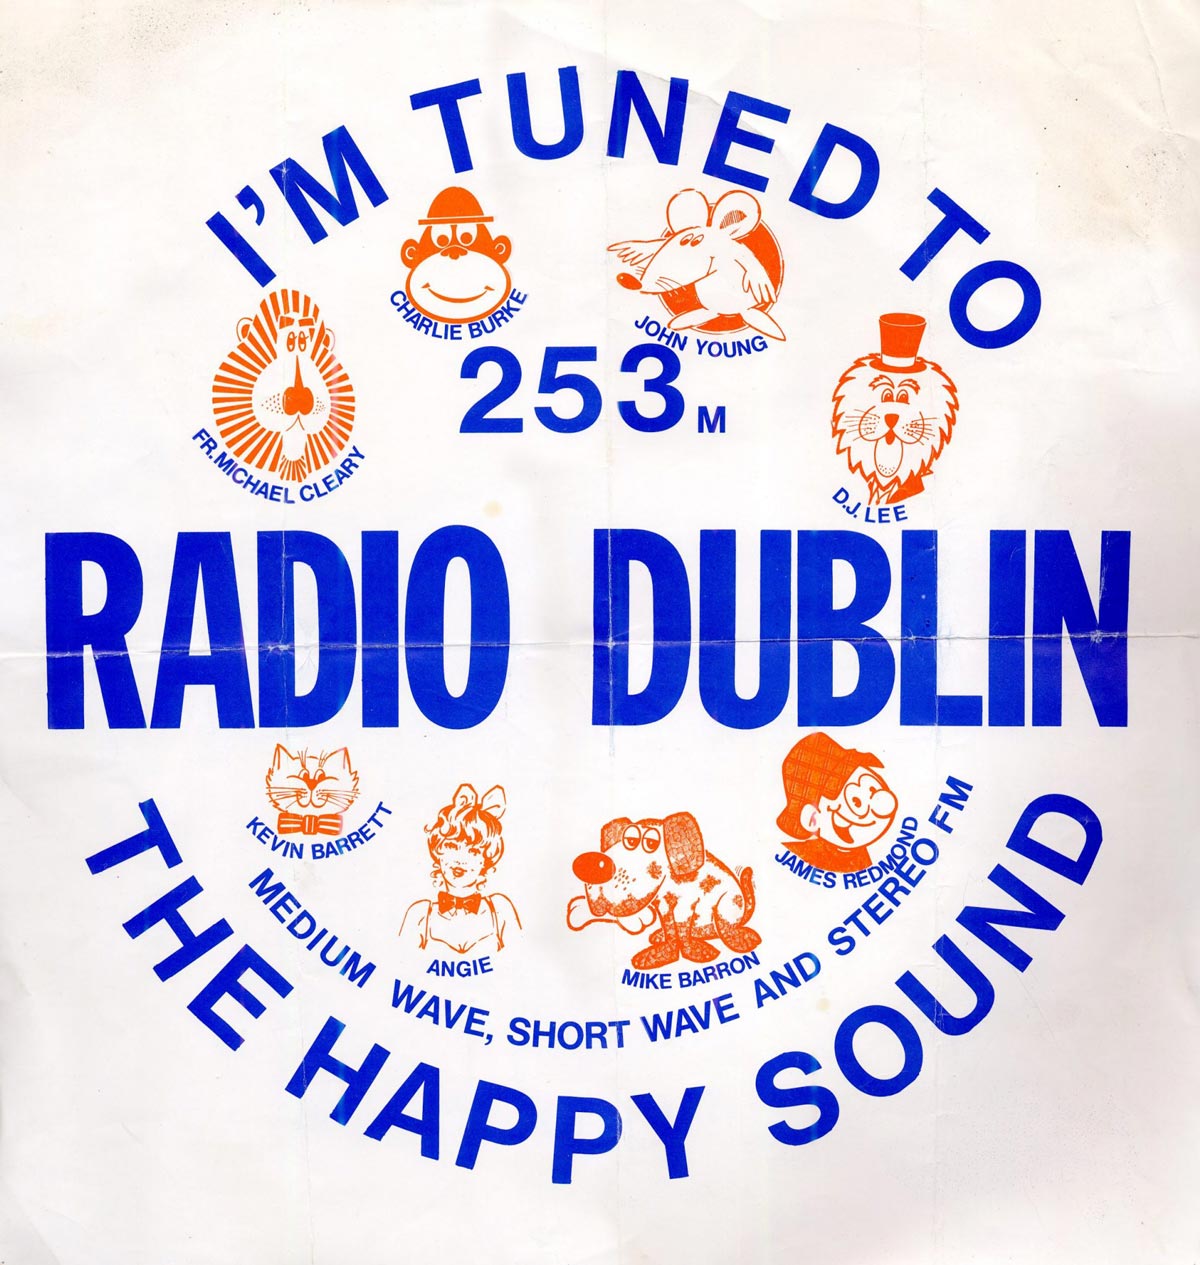 Poster design with retro/vintage feel for Radio Dublin